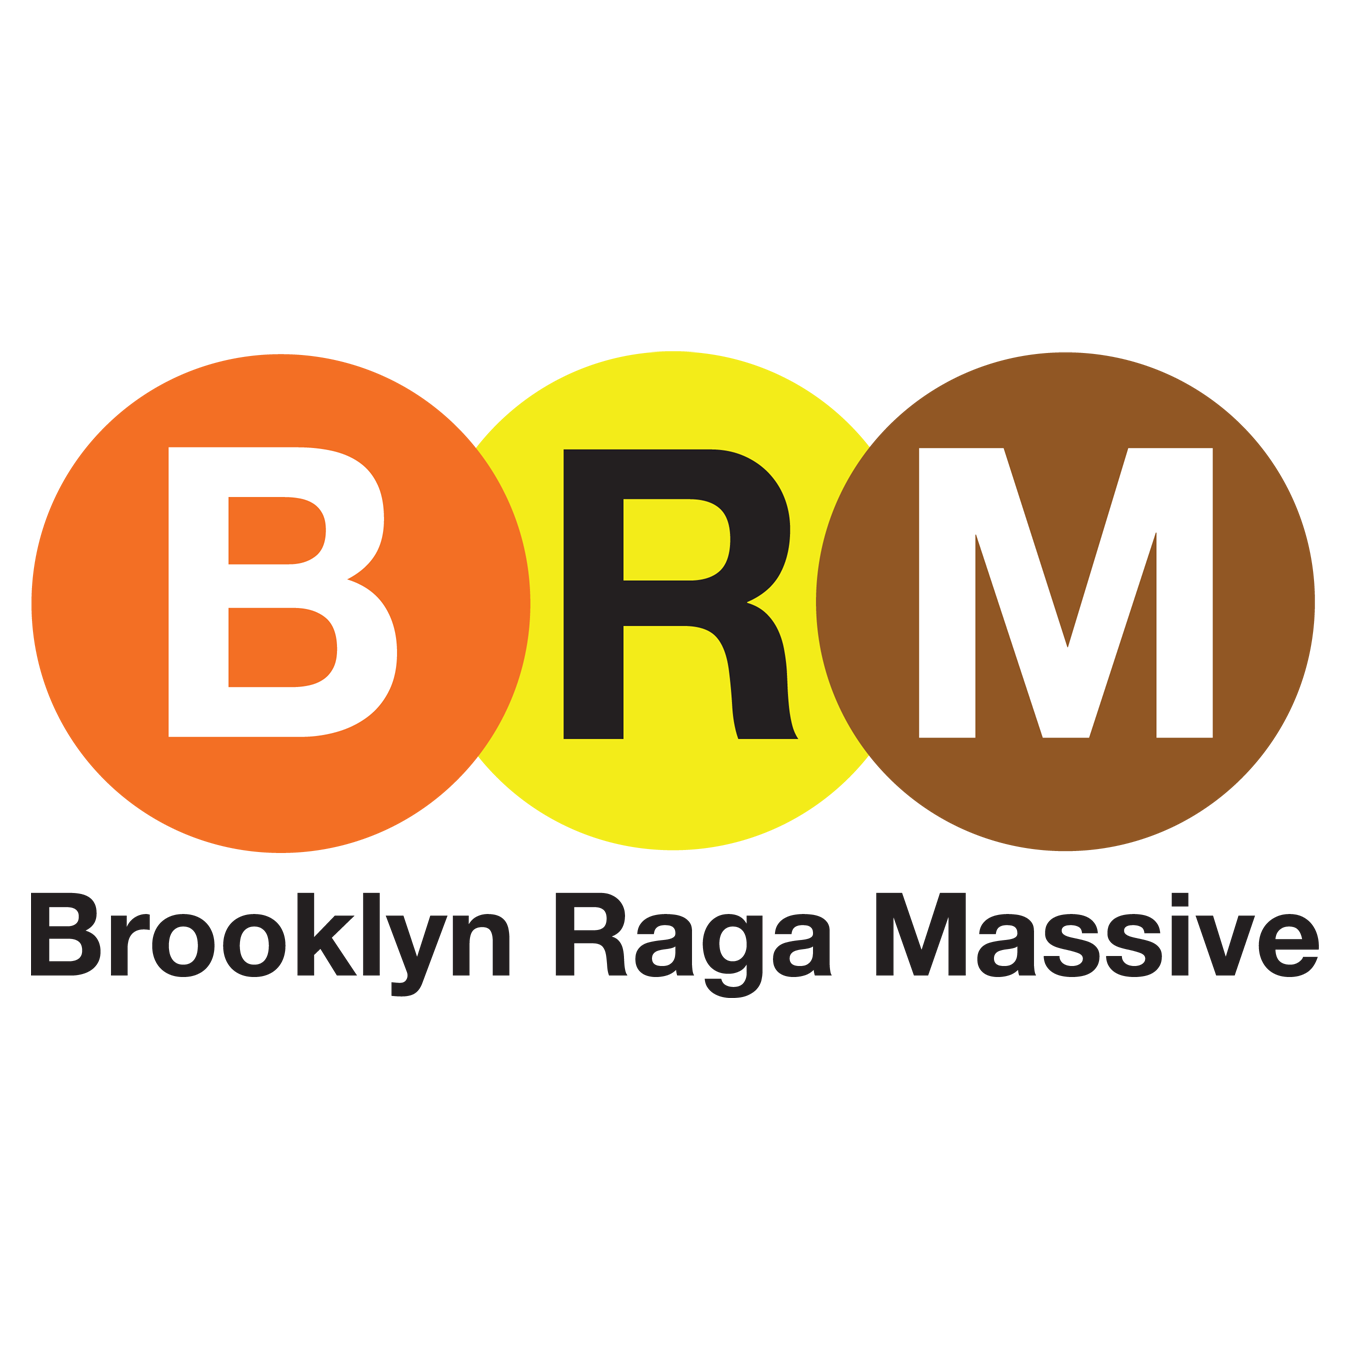 B R M subway tiles with text brooklyn raga massive